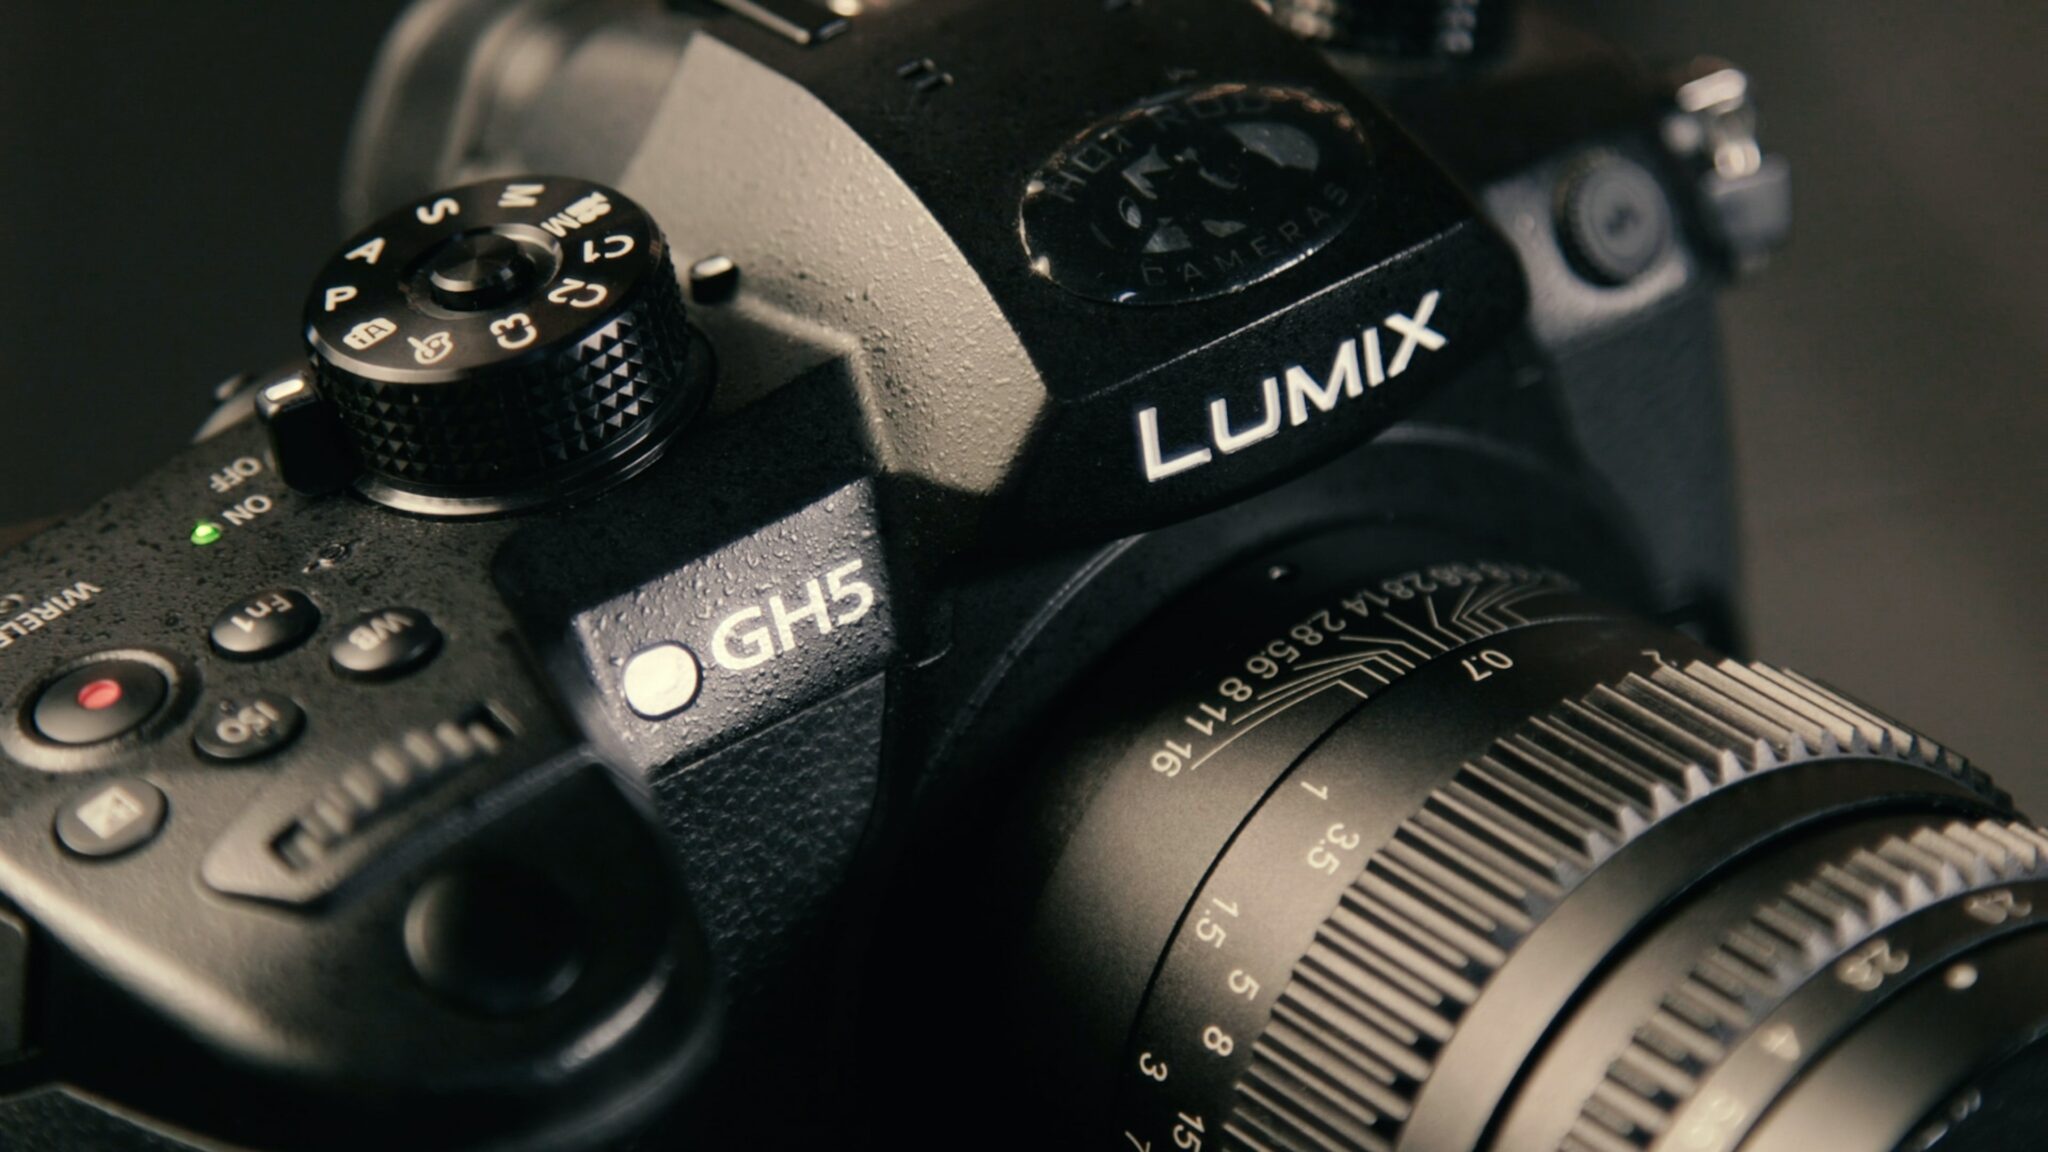 Panasonic LUMIX GH5S: La cámara ideal para cineastas y videógrafos.